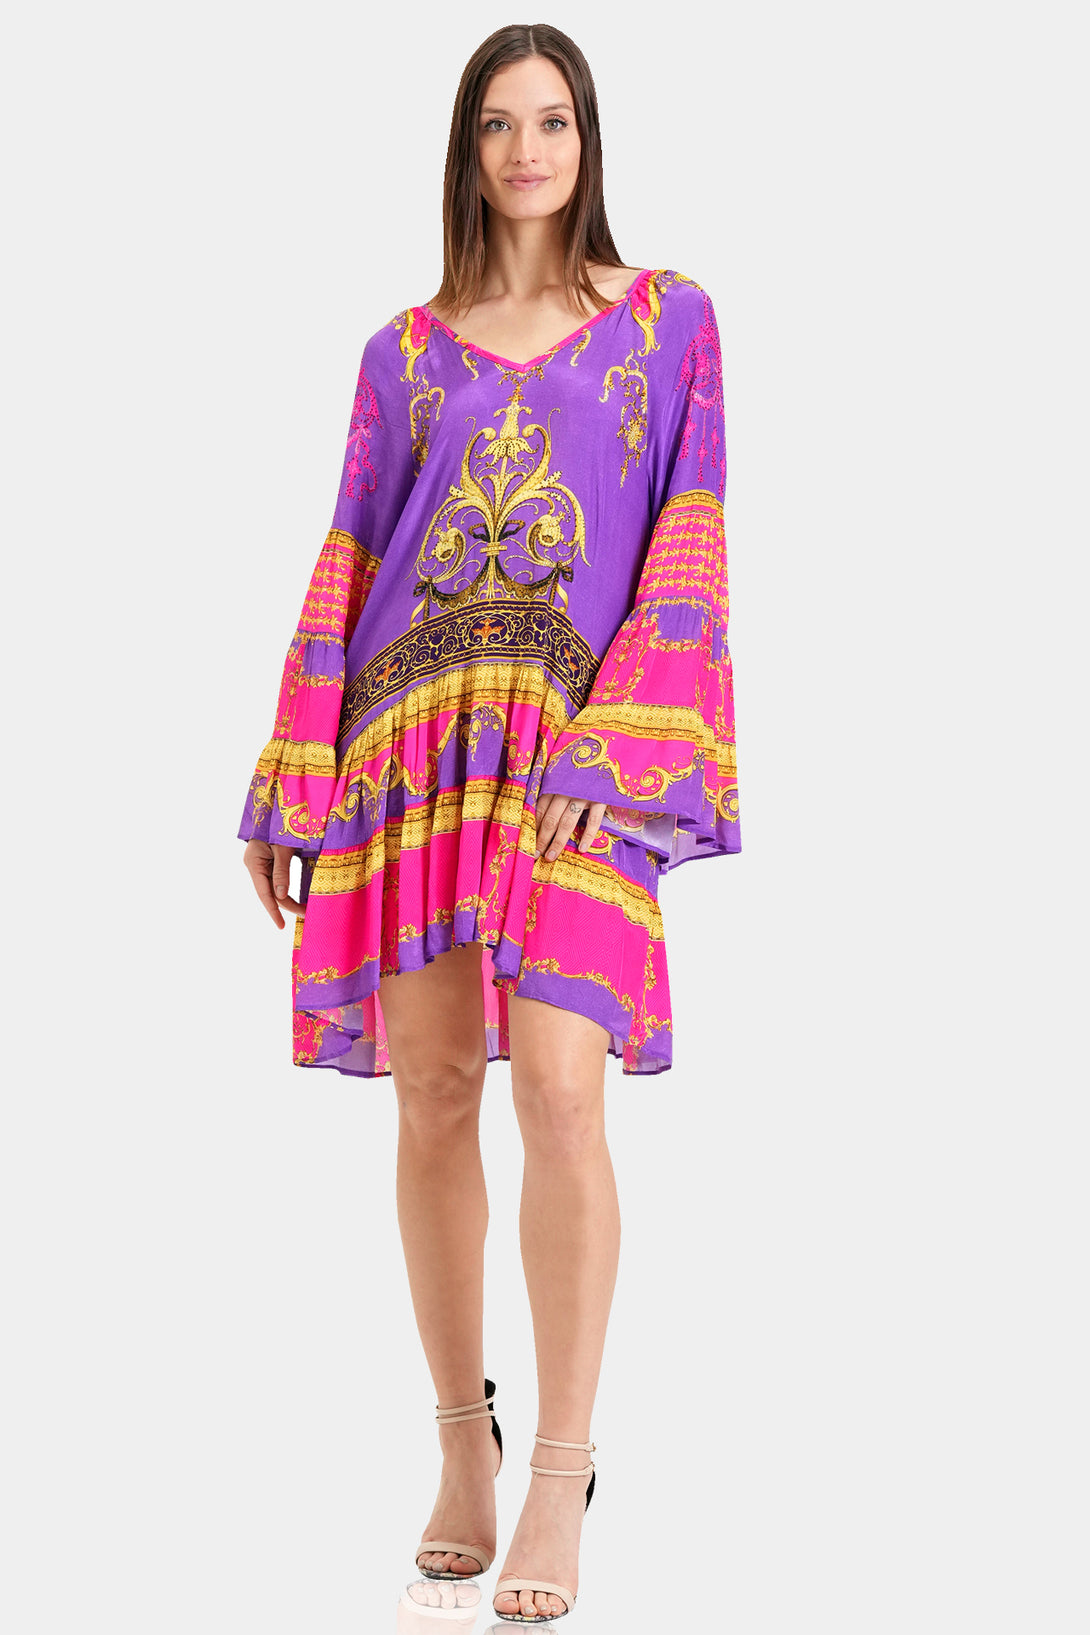  satin purple mini dress, Shahida Parides, sleeveless short dress, short frock for women party wear,